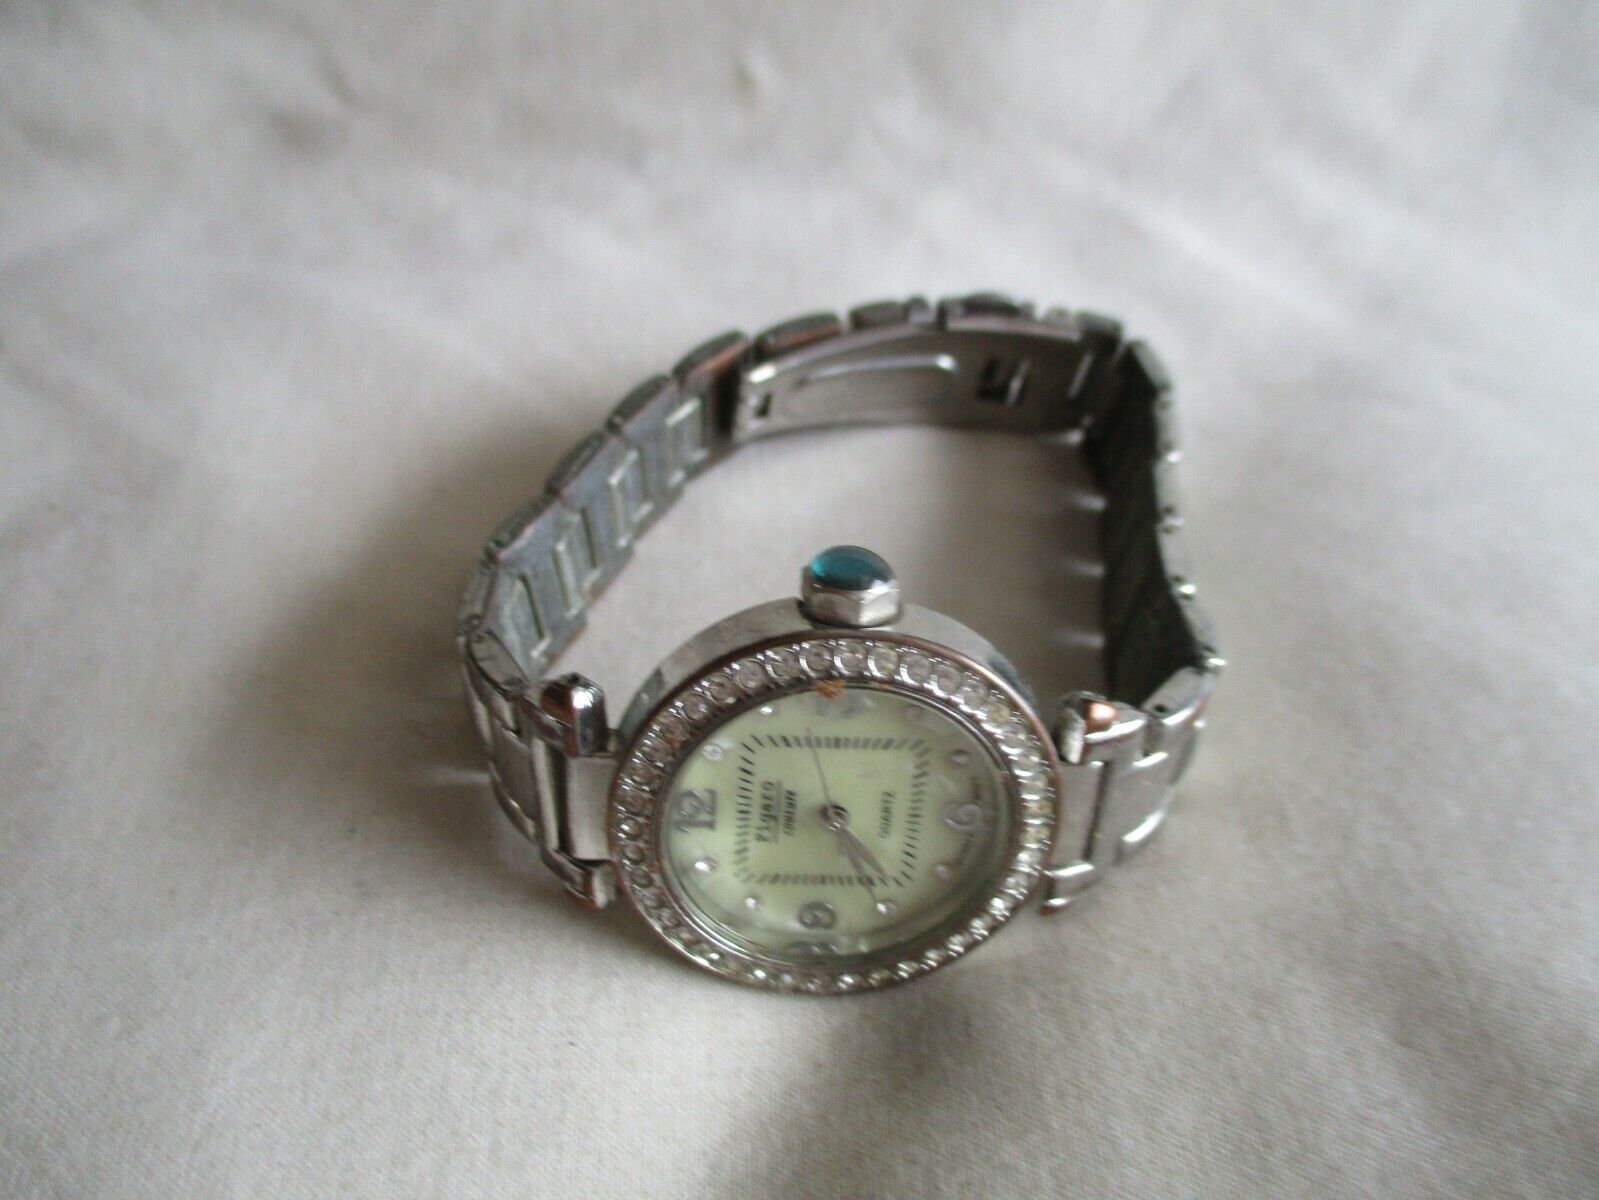 Figaro Couture Analog Wristwatch with Quartz Movement